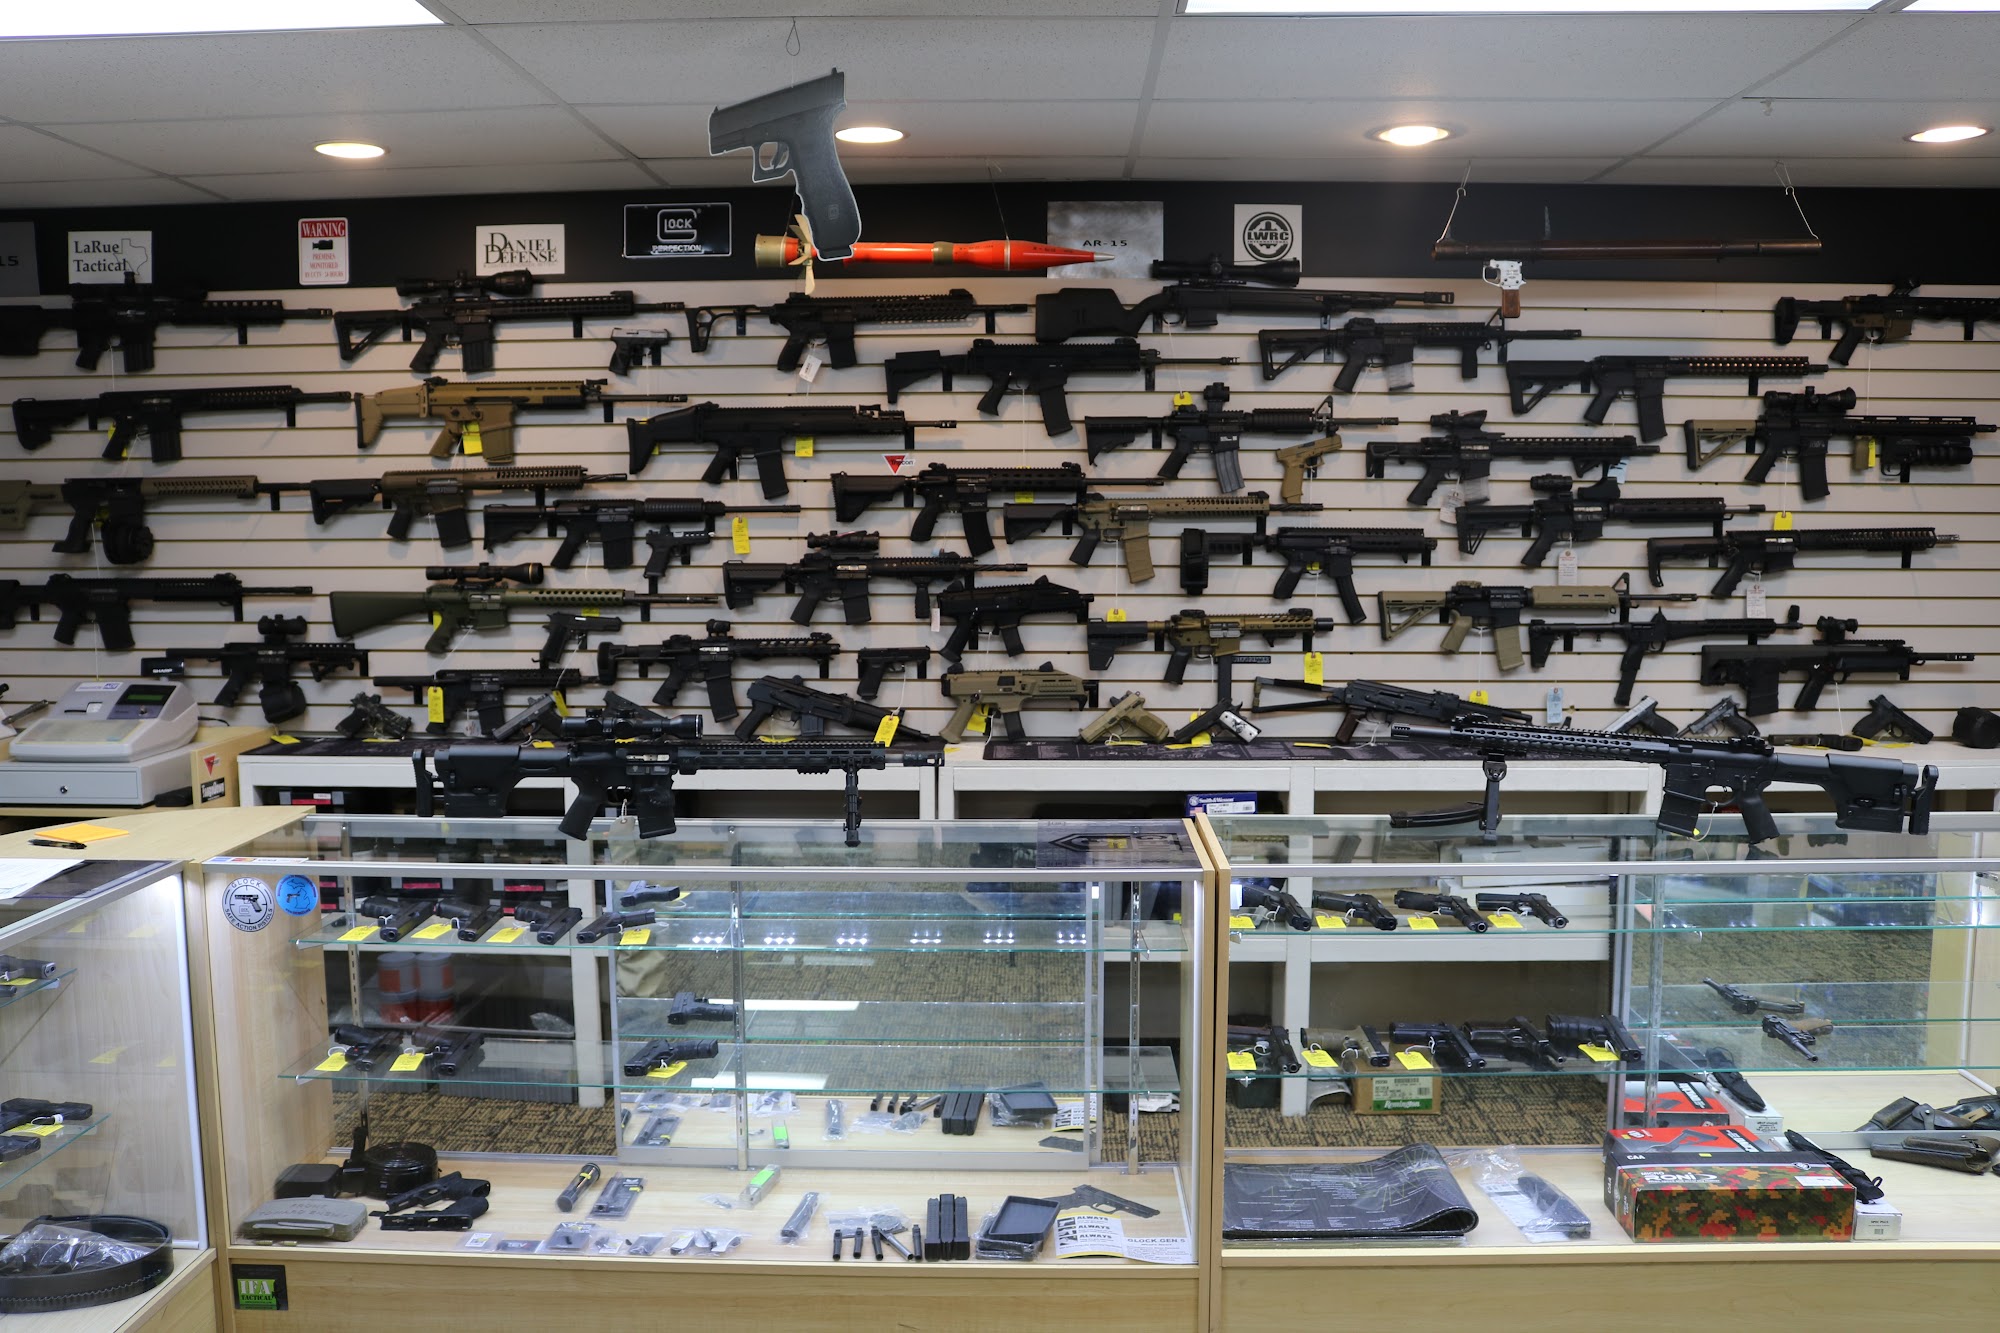 IFA Tactical Gun Shop